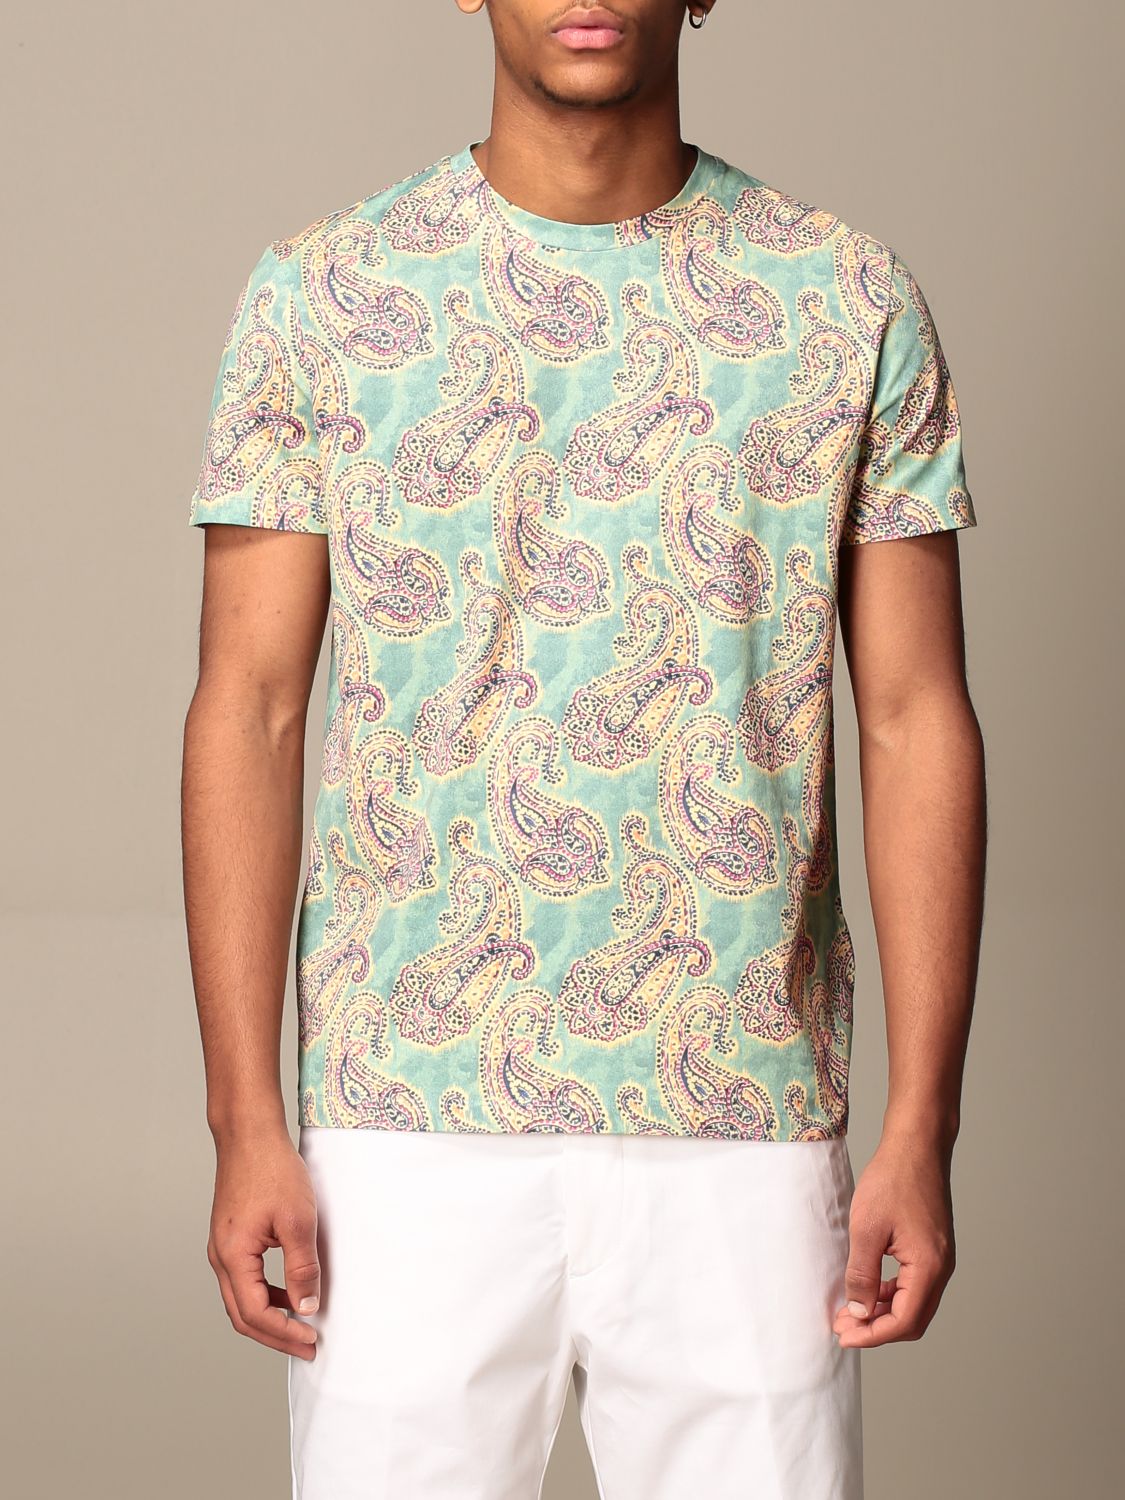 ETRO: t-shirt in Paisley patterned cotton - Multicolor | Etro t-shirt ...